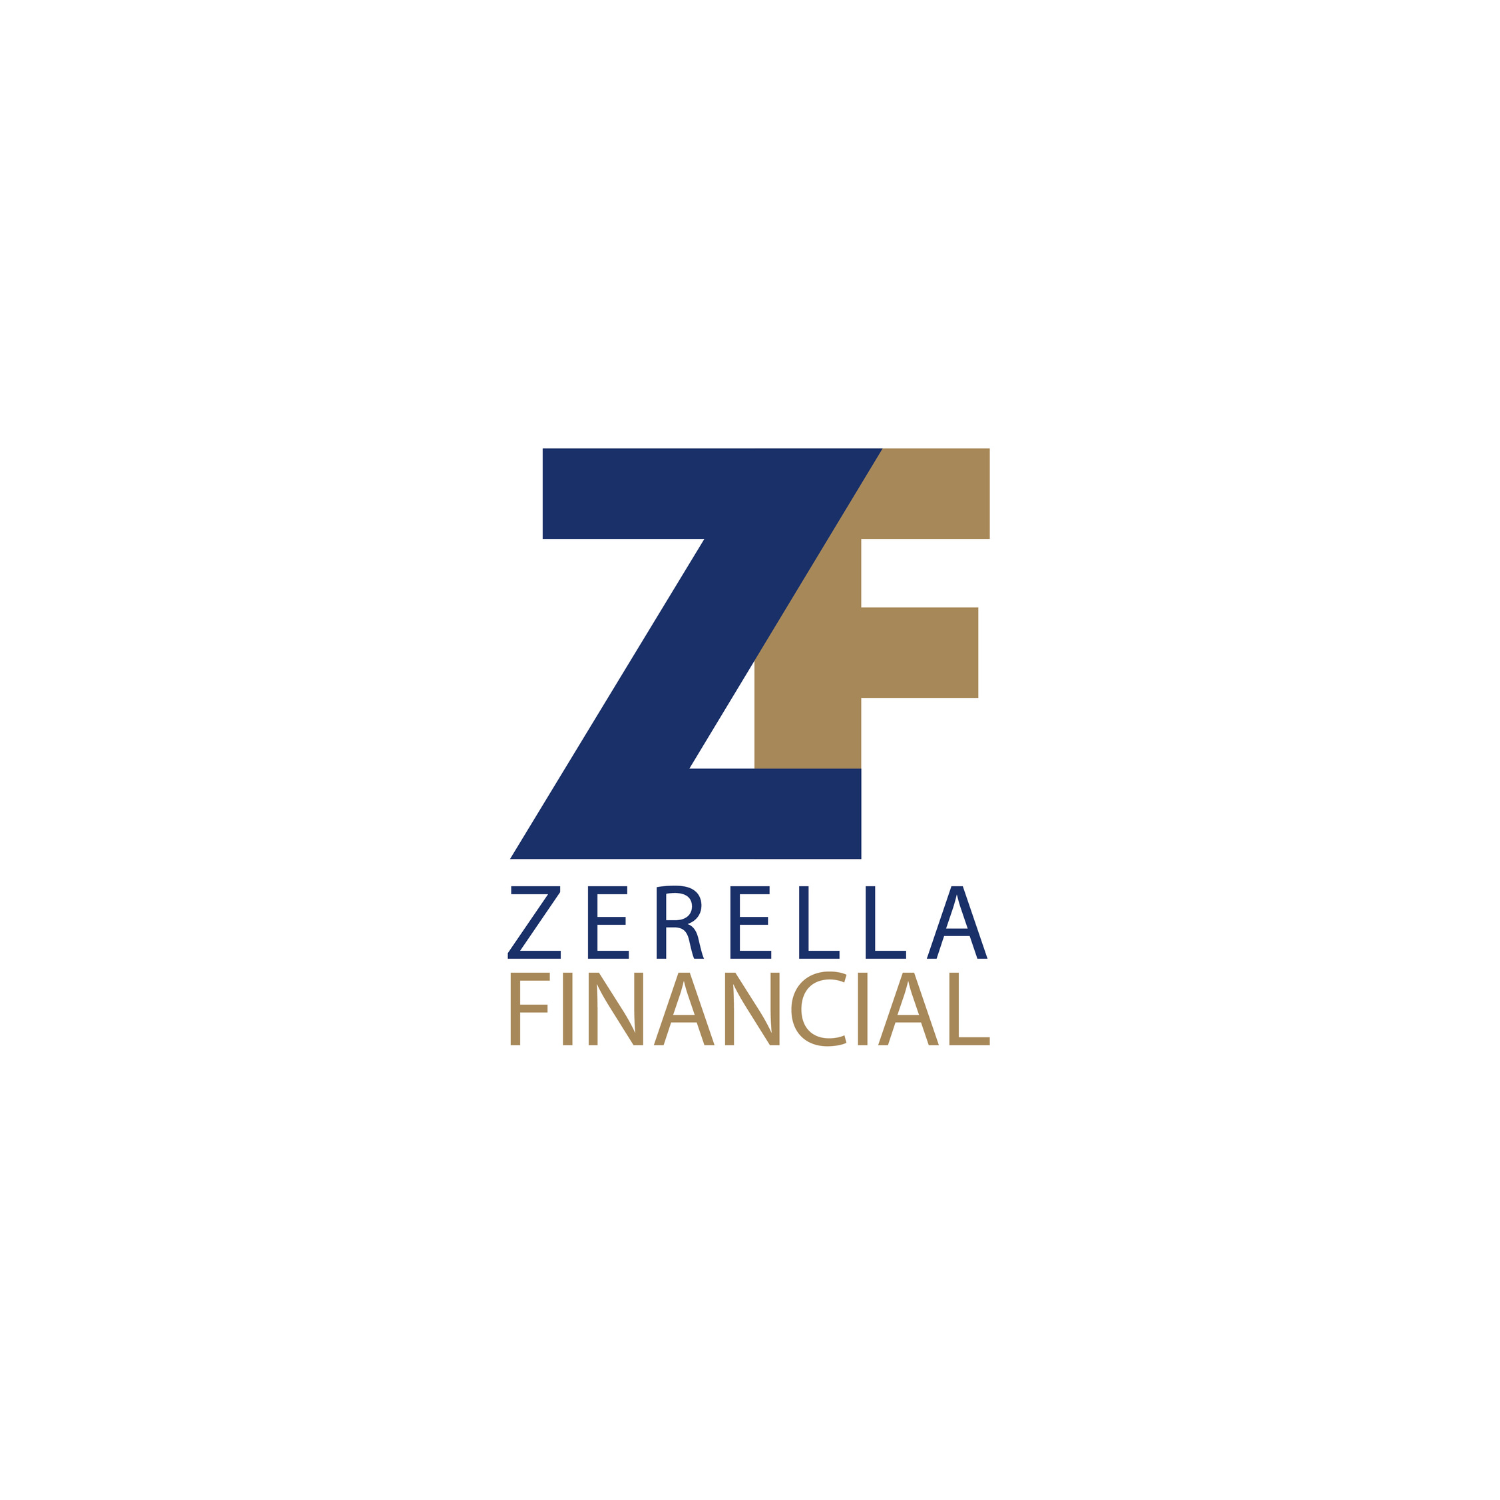 <a class="testimonials" href="https://www.zerellafinancial.com.au/" target="_blank">JOE ZERELLA</a>